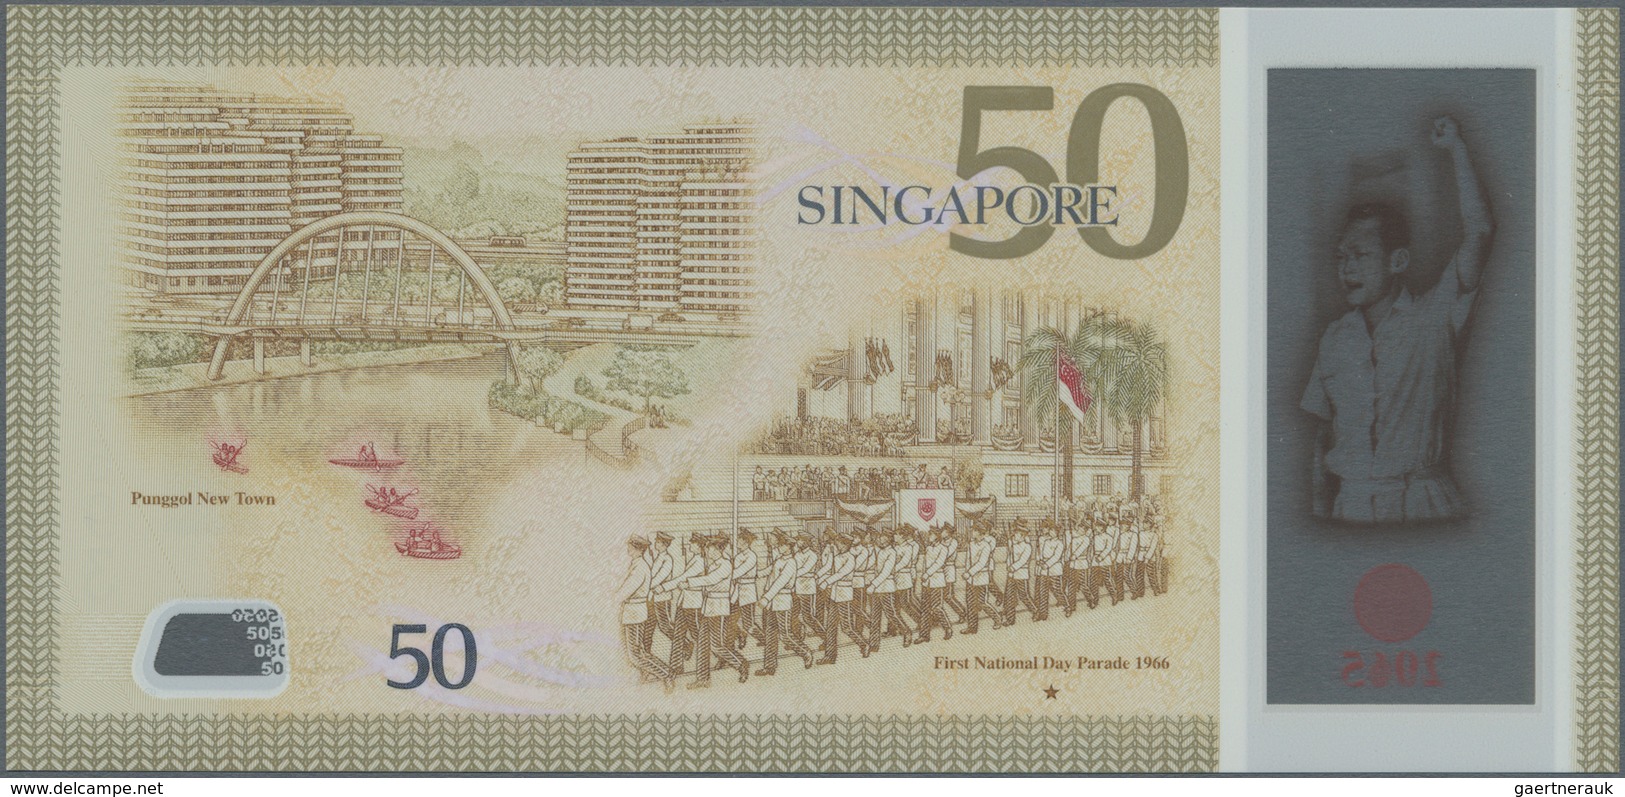 Singapore / Singapur: Monetary Authority Of Singapore Set With 6 Banknotes Of The 2015 Series Commem - Singapur